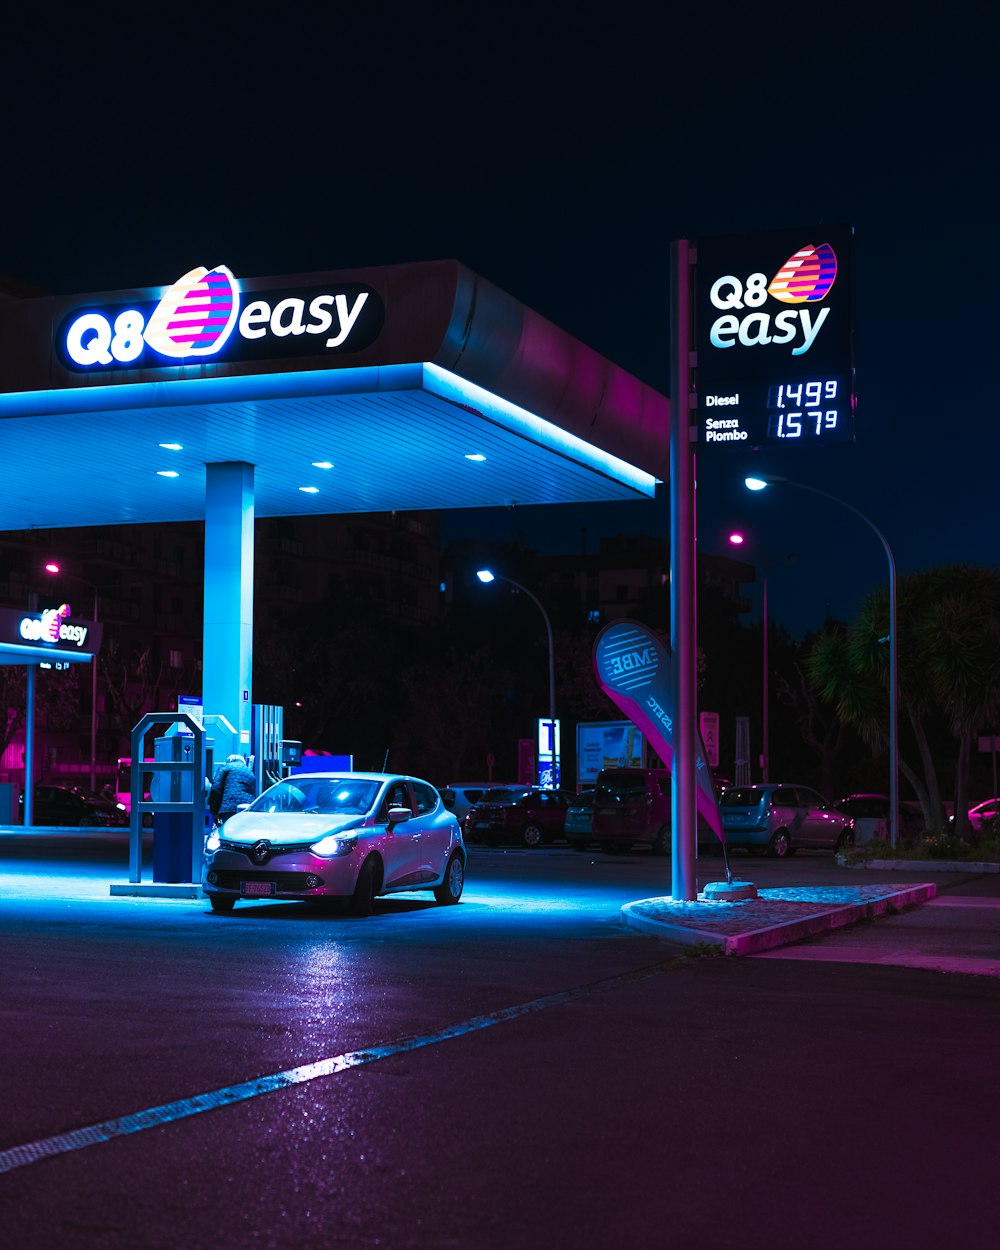 Q8 Easy gasoline station